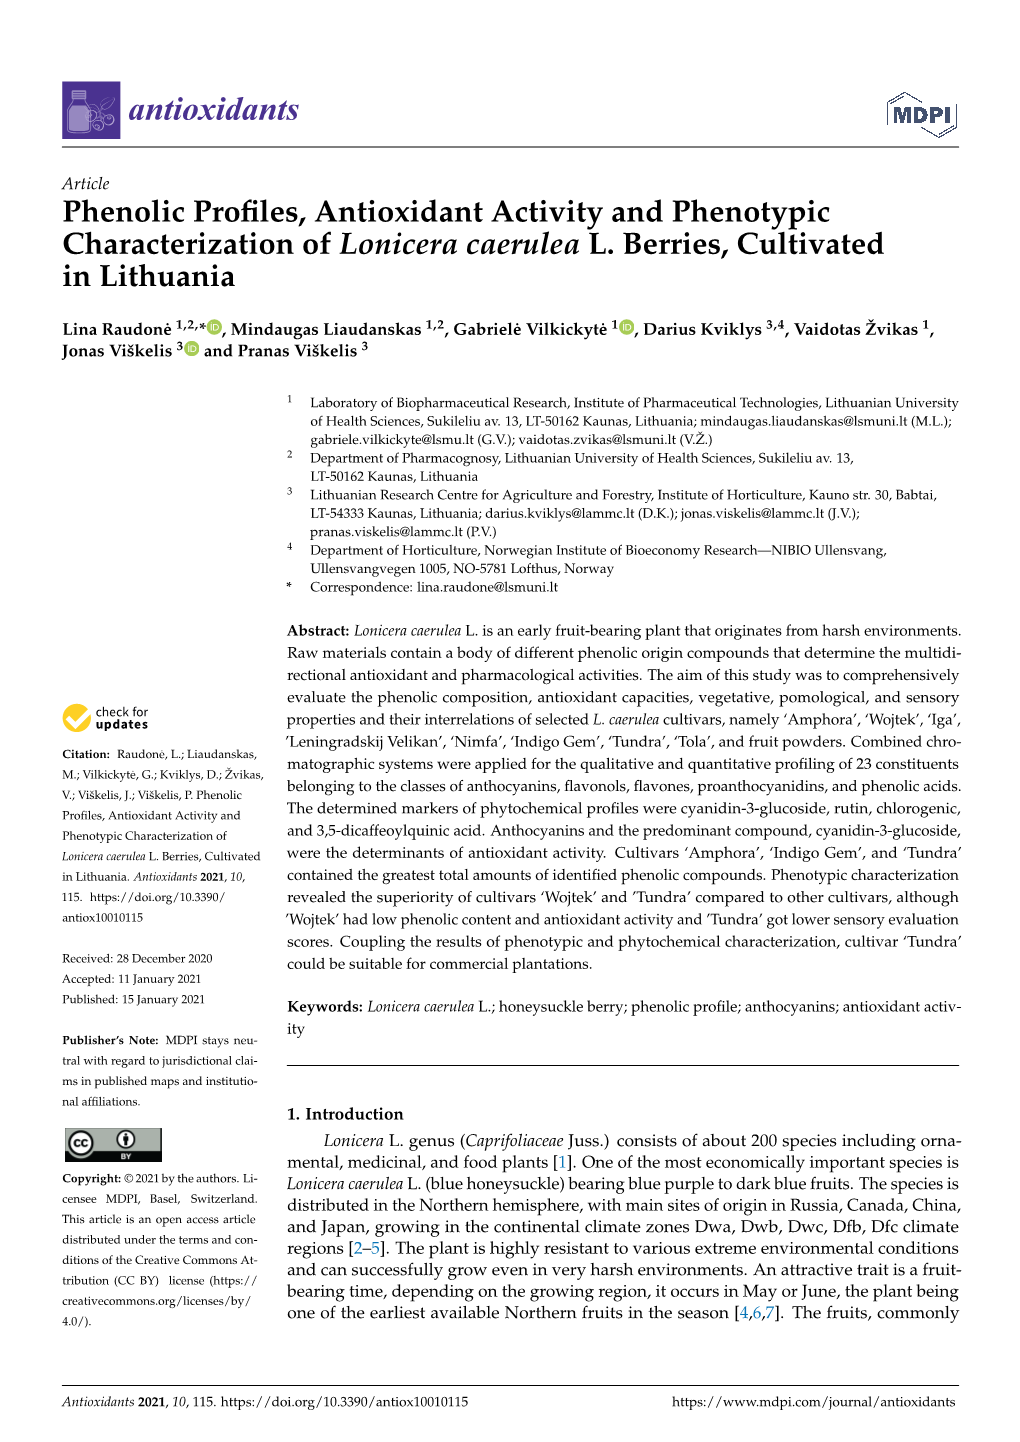 Phenolic Profiles, Antioxidant Activity and Phenotypic Characterization Of